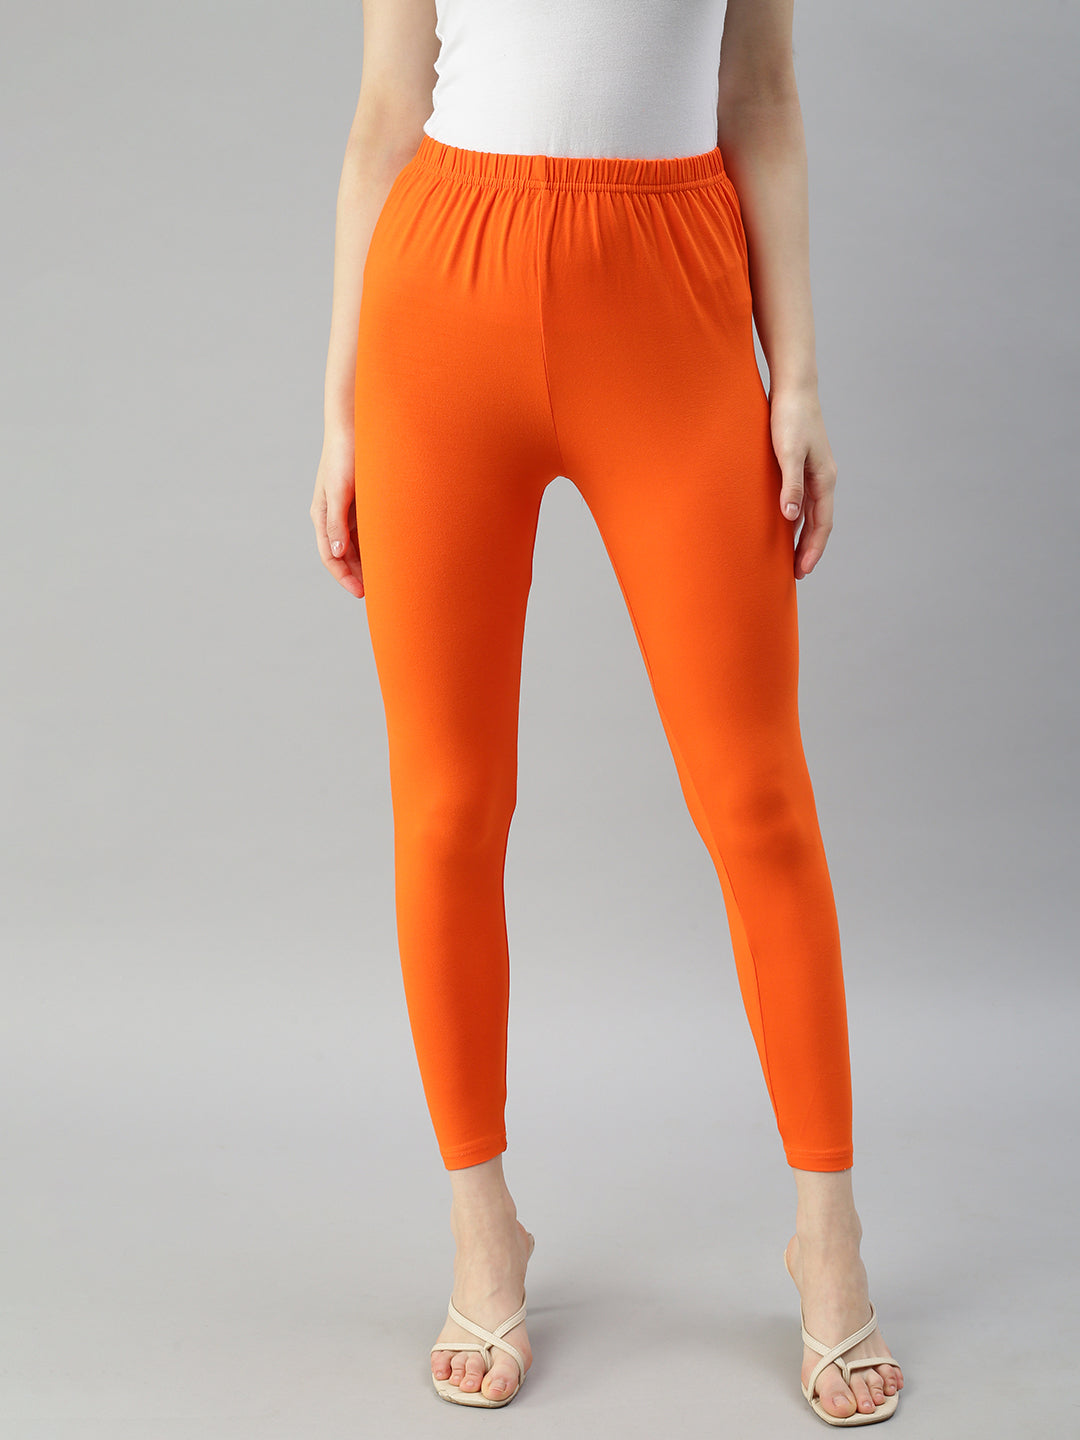 Prisma Orange Ankle Leggings - Stylish and Comfortable